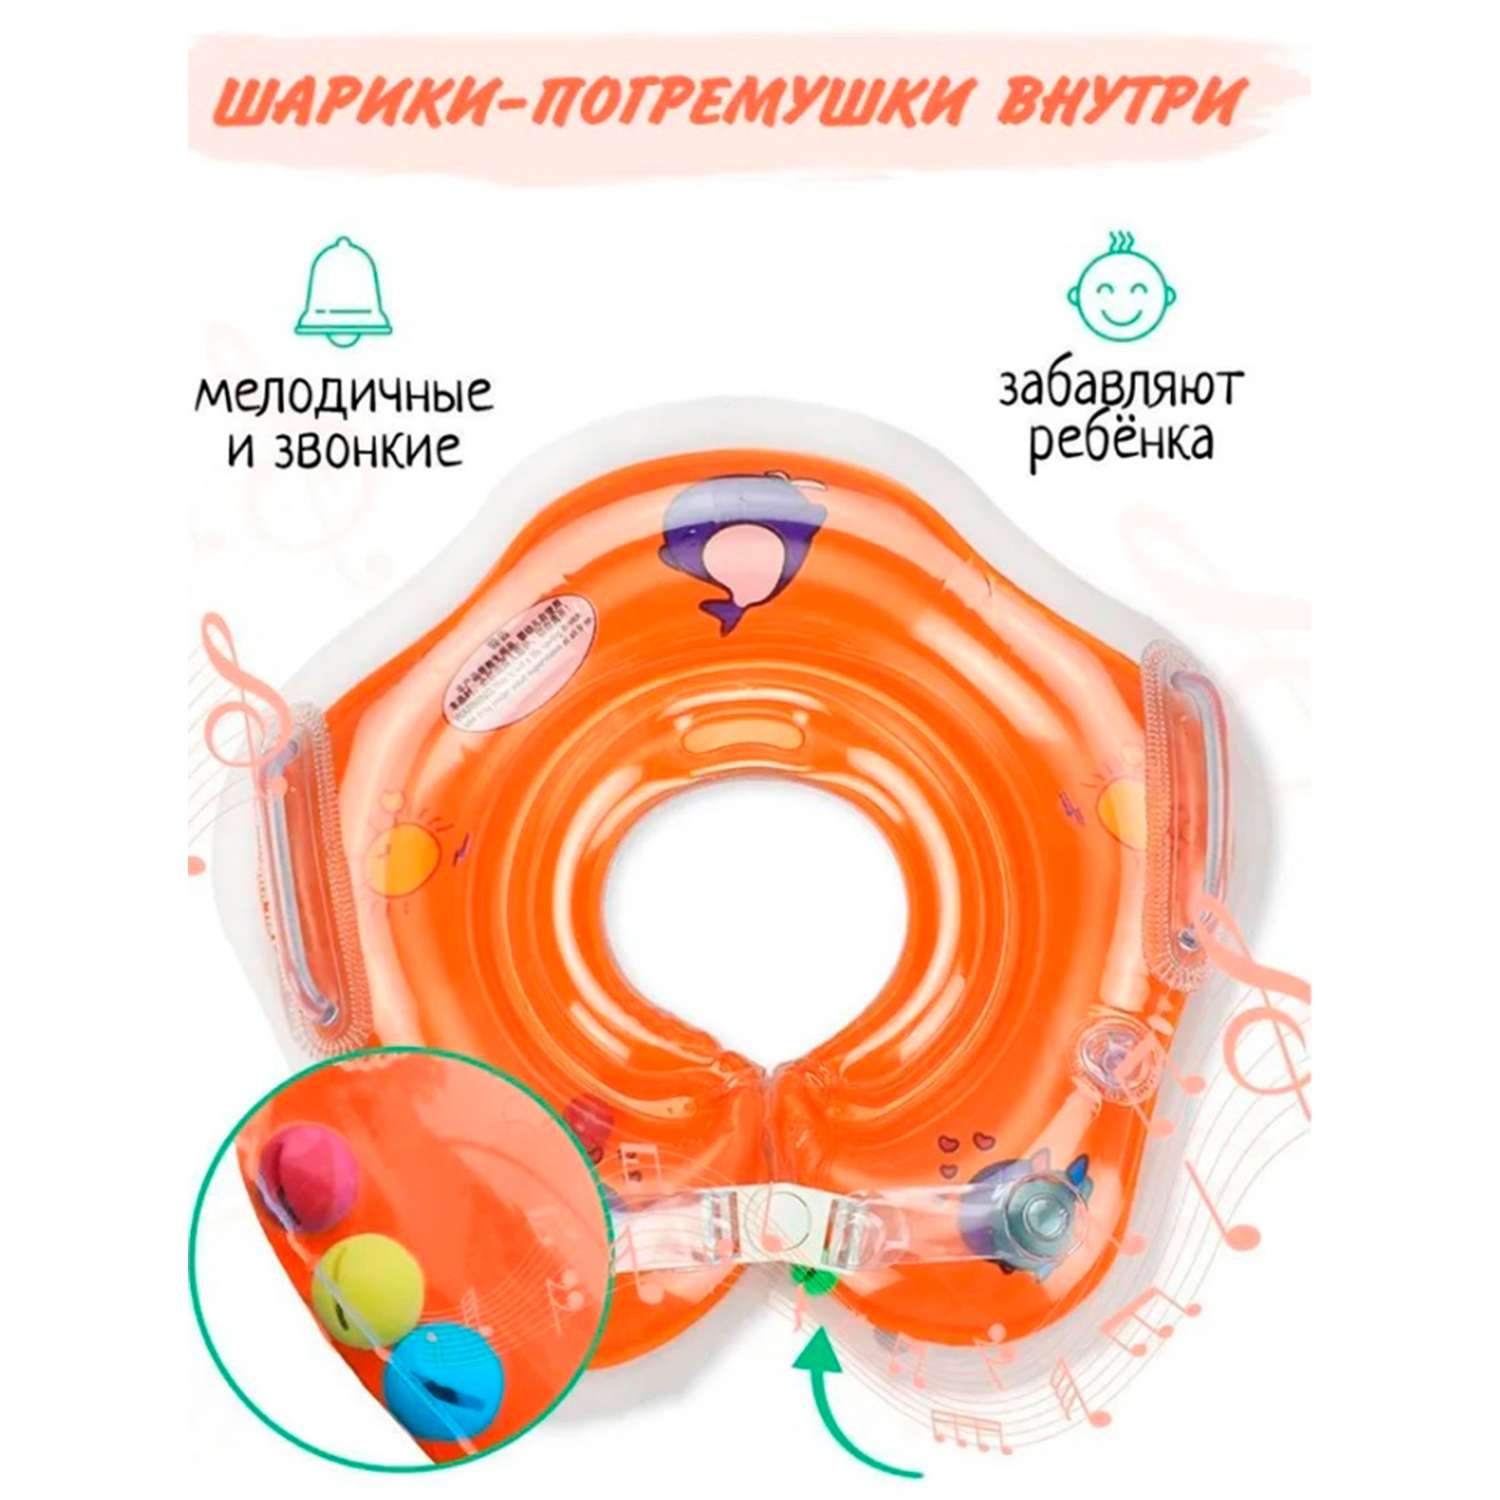 Надувной круг SHARKTOYS Для младенцев оранжевый - фото 1